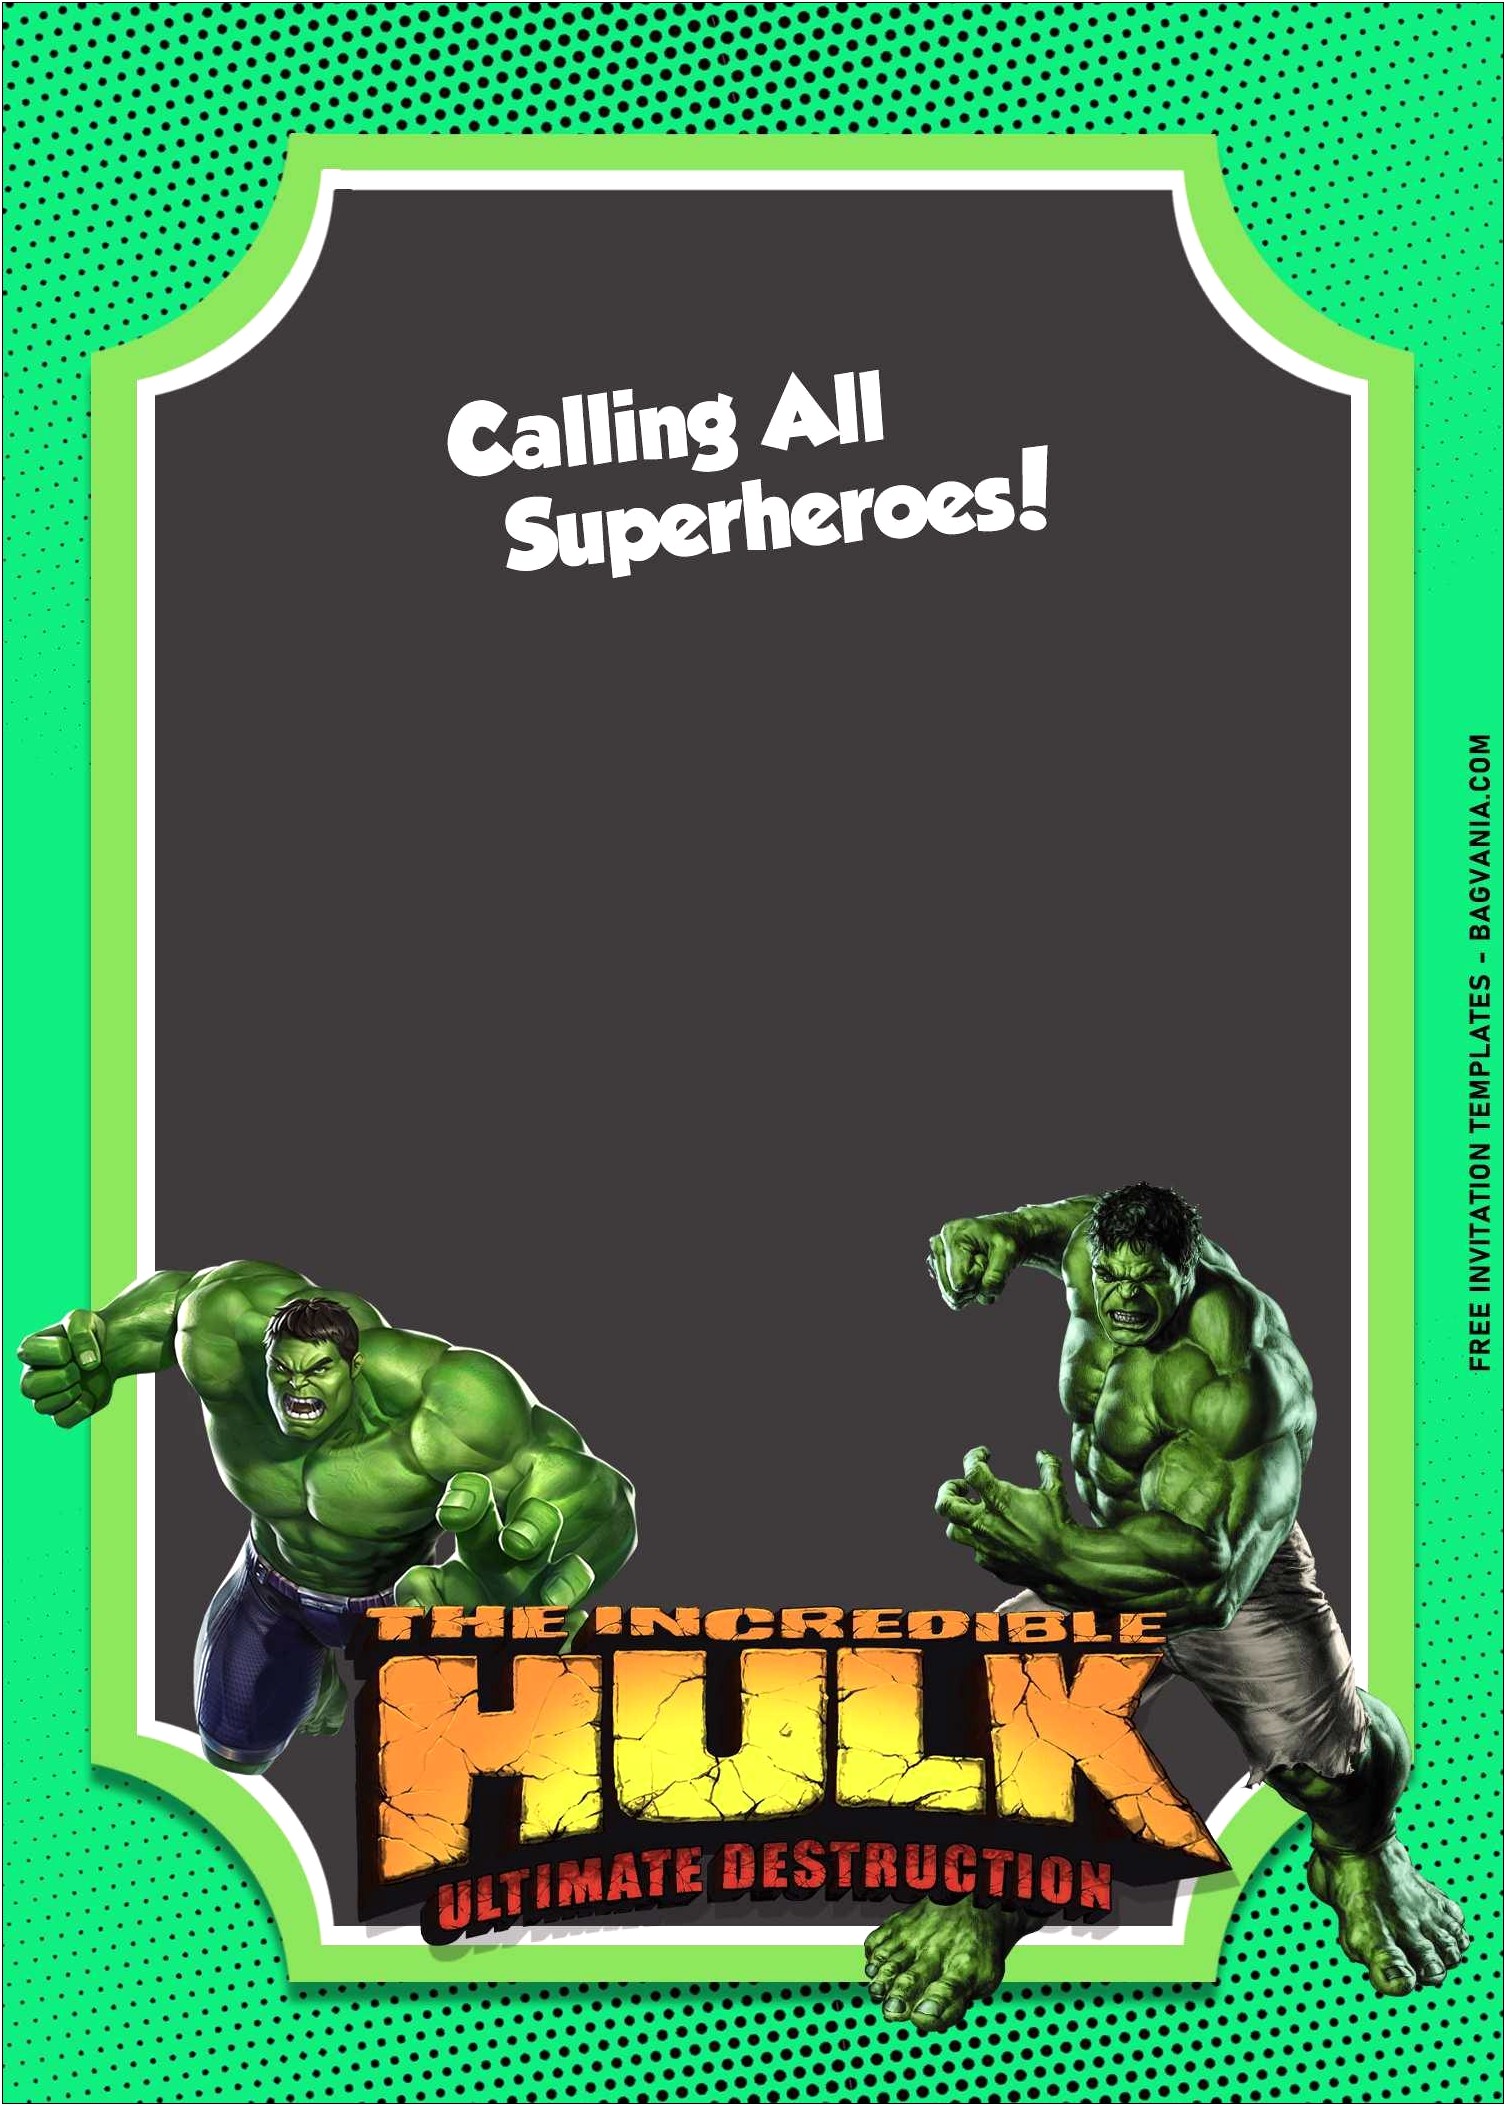 Calling All Superheroes Invitation Template Free